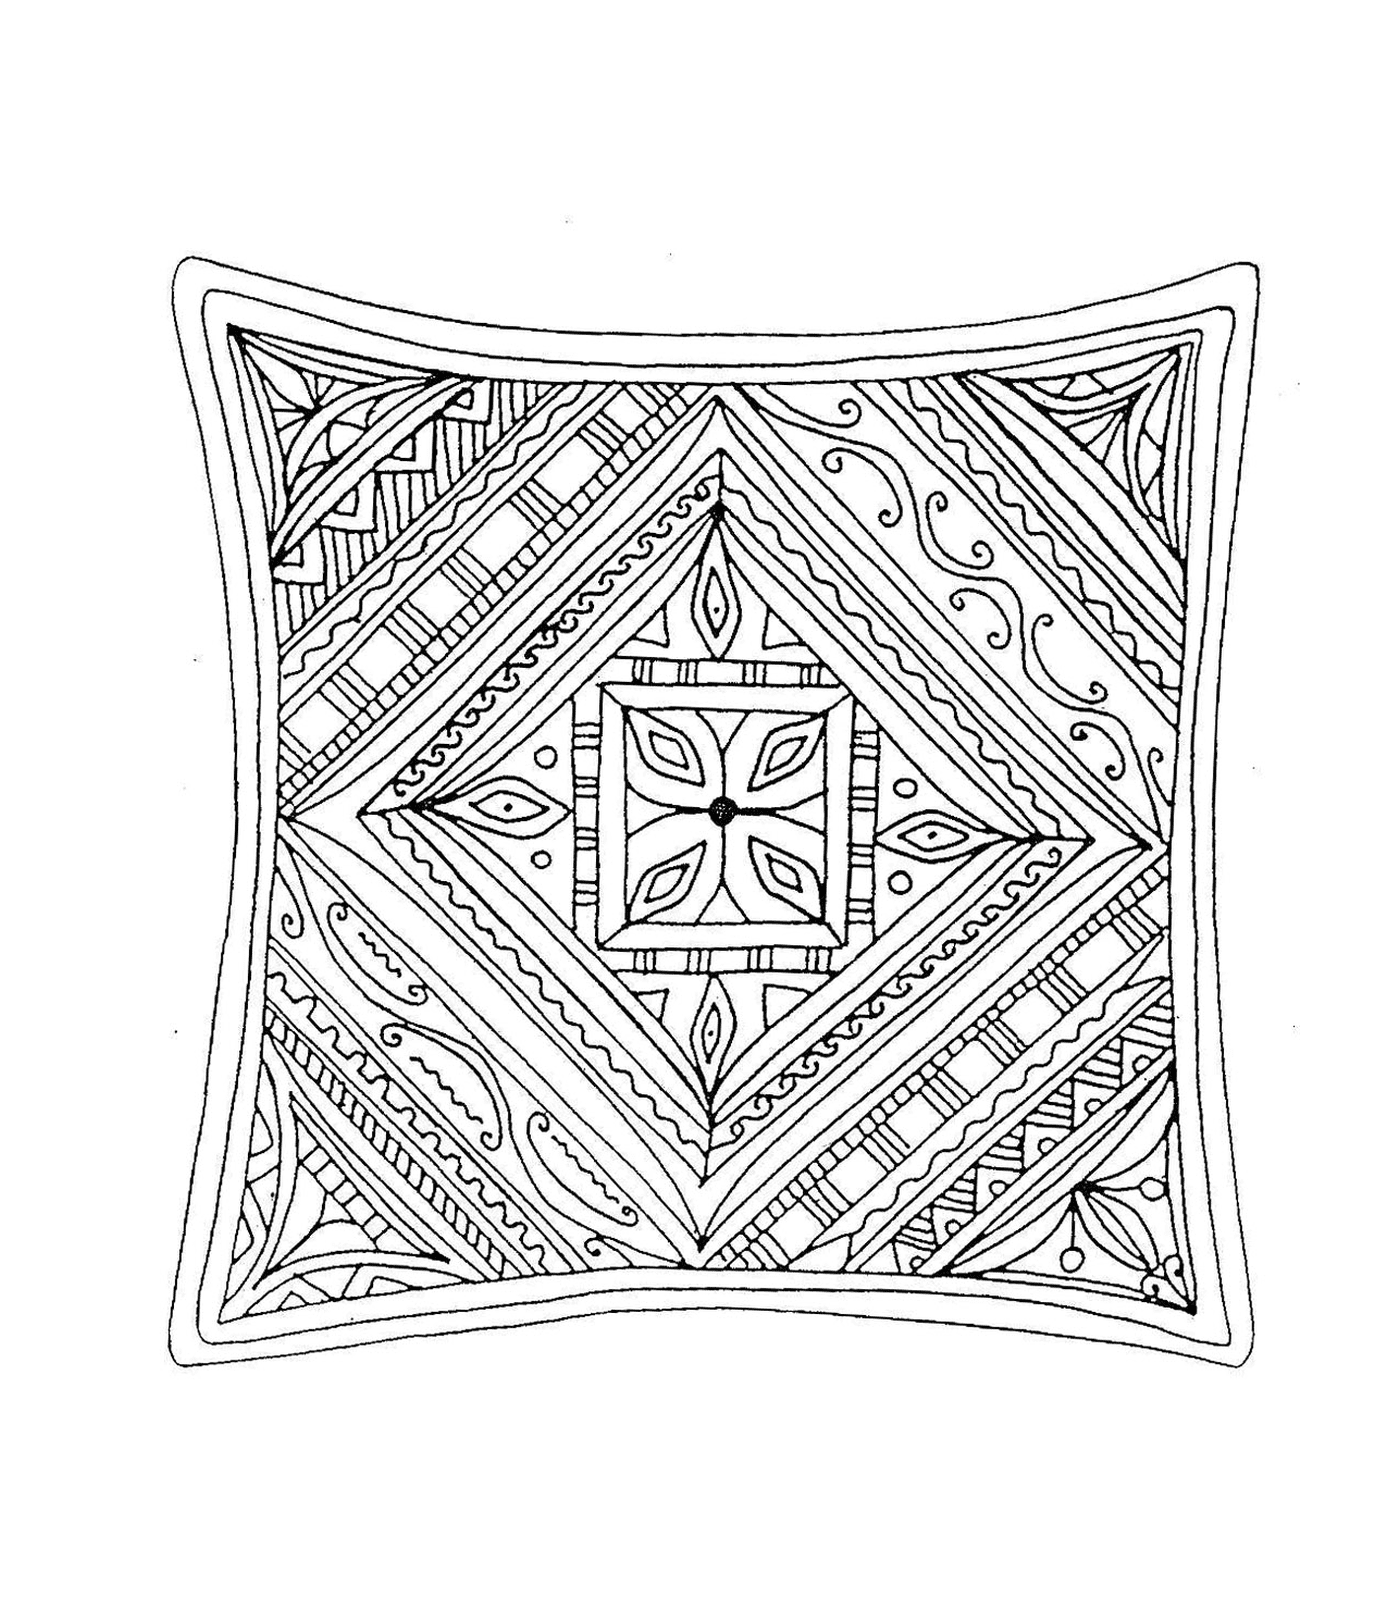  Image of a decorative cushion 